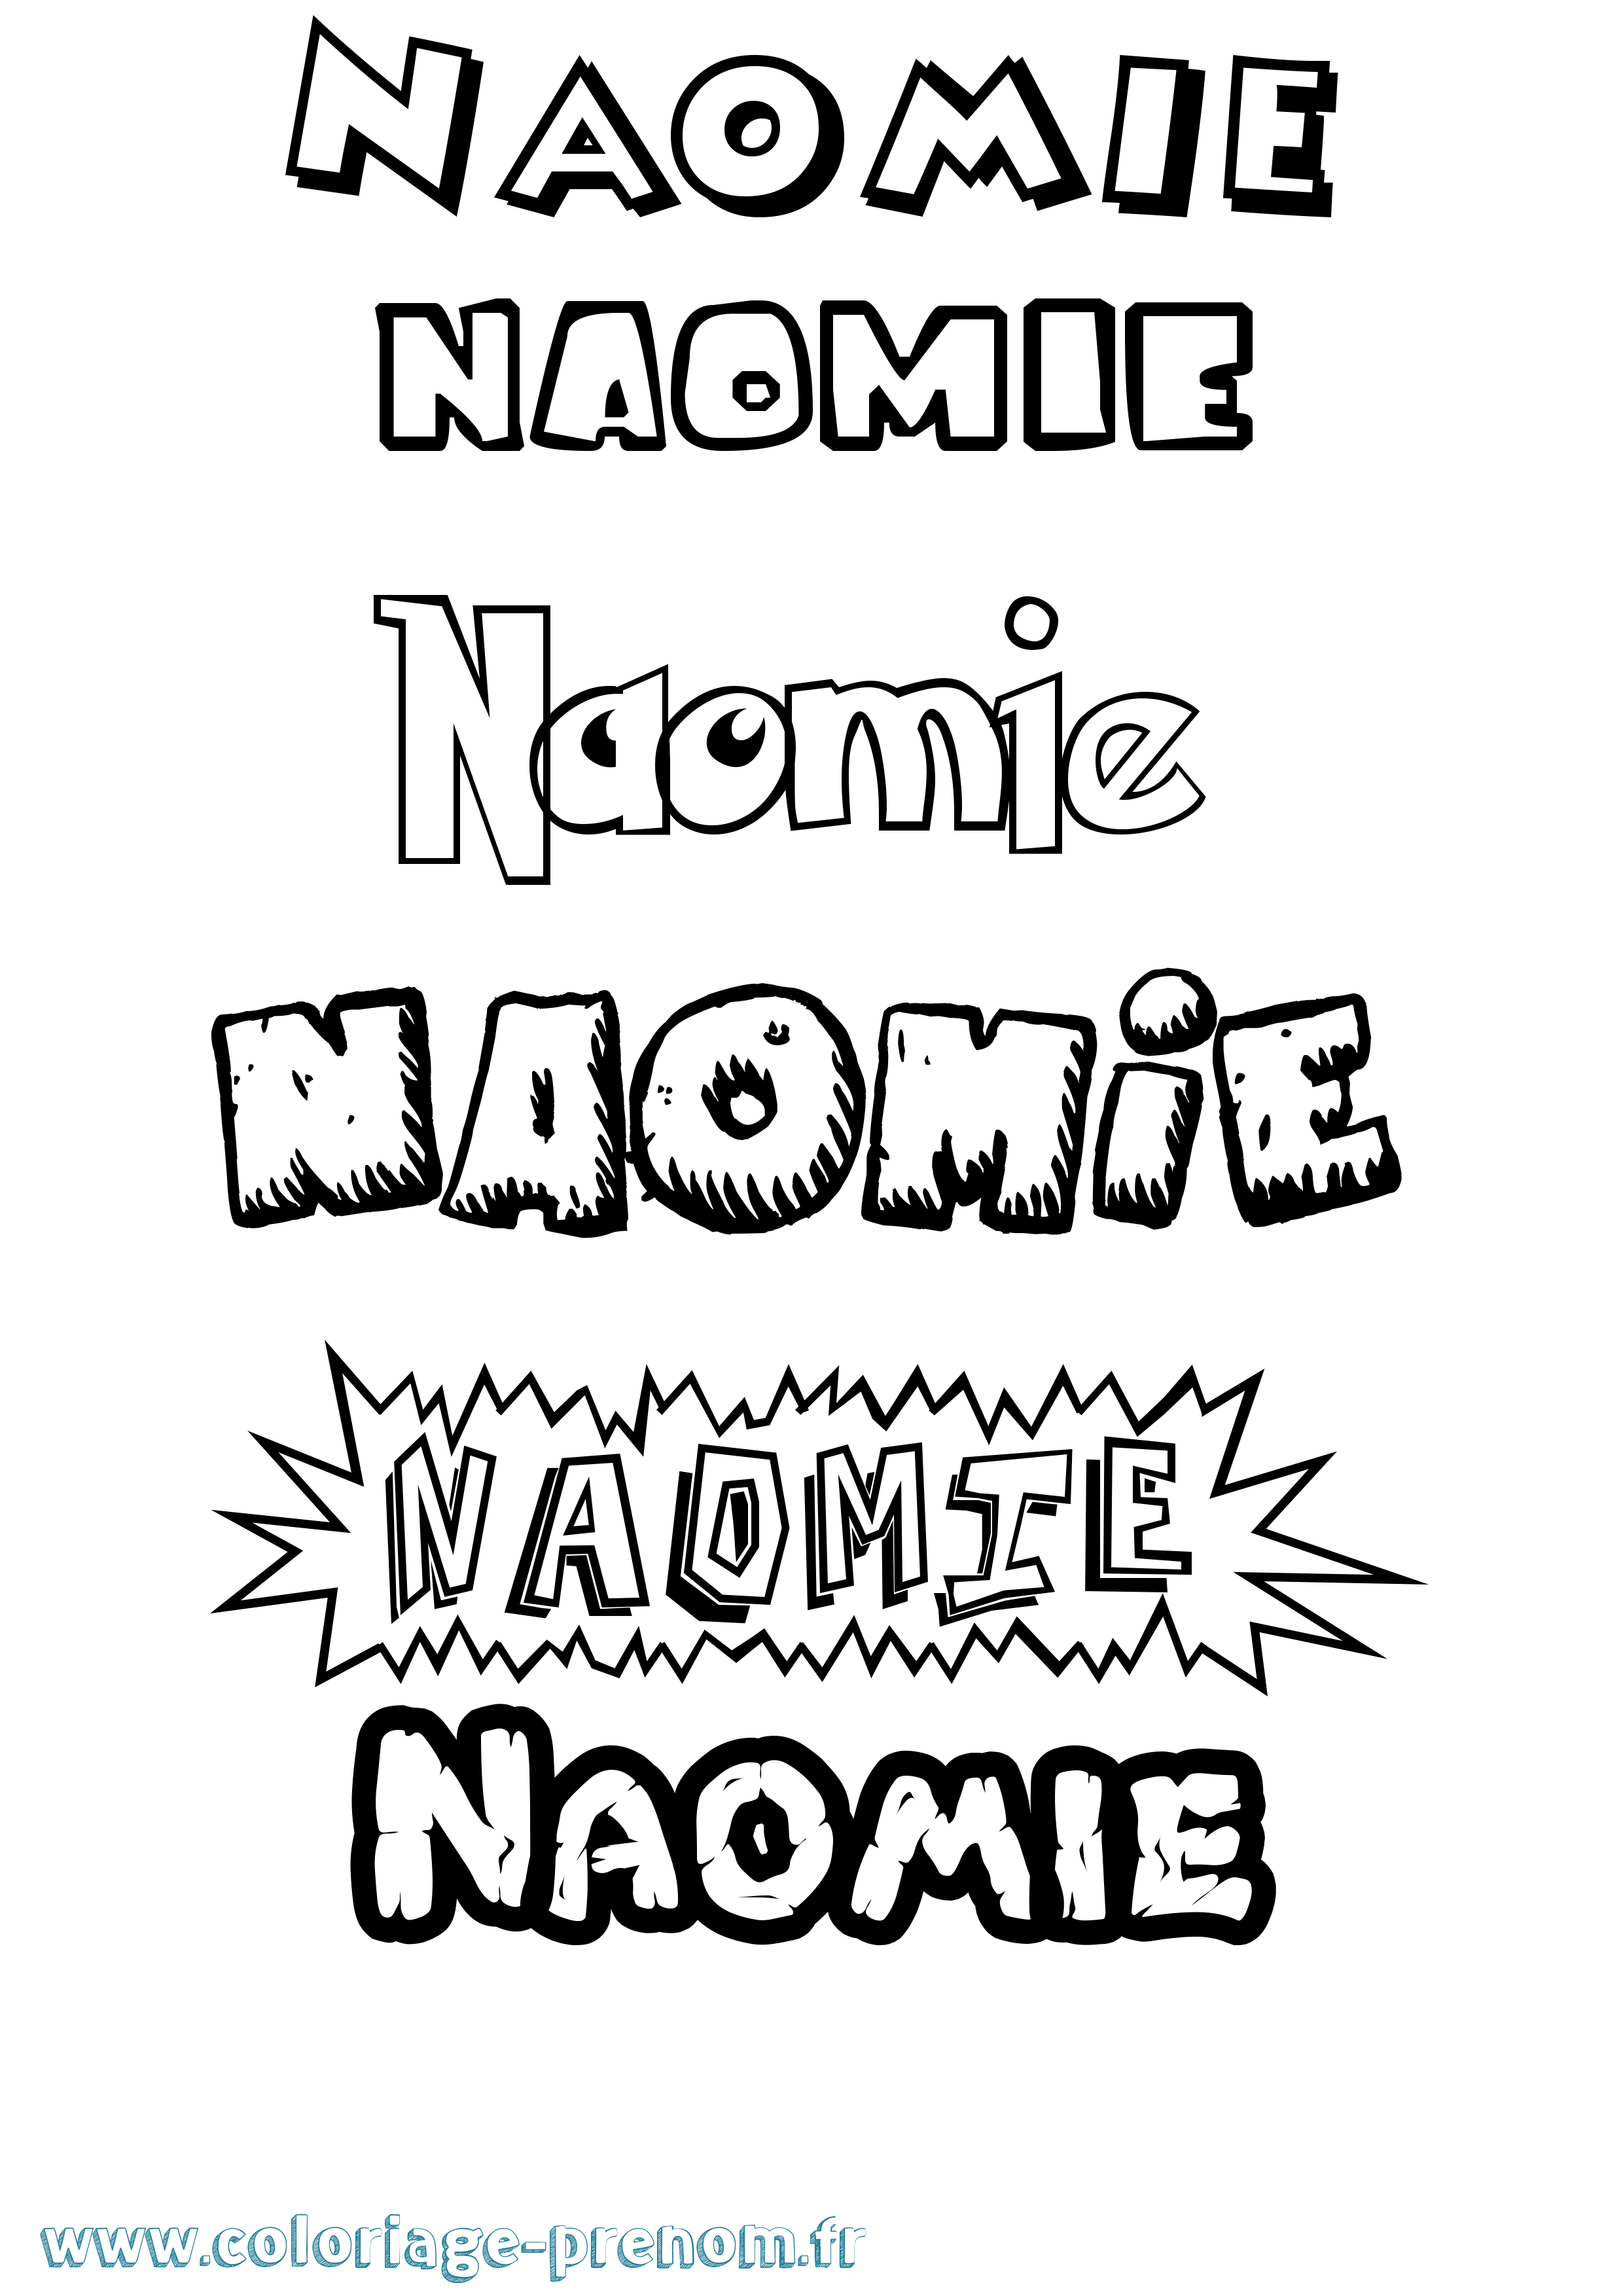 Coloriage prénom Naomie